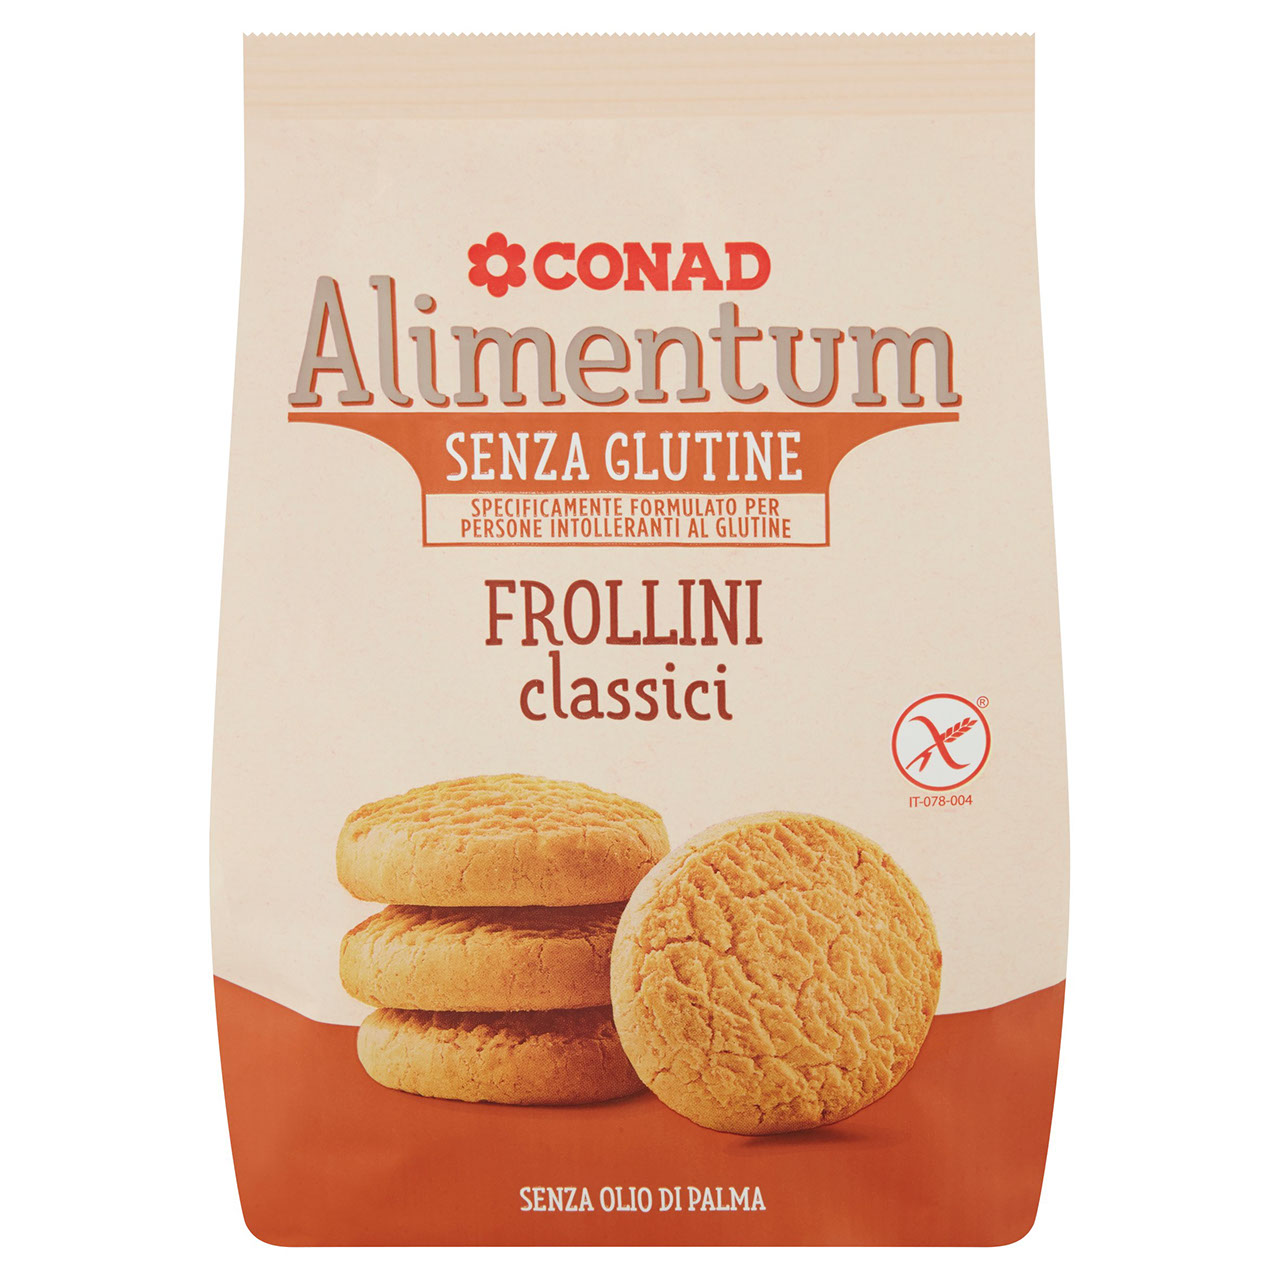 Frollini classici 400 g Alimentum Conad